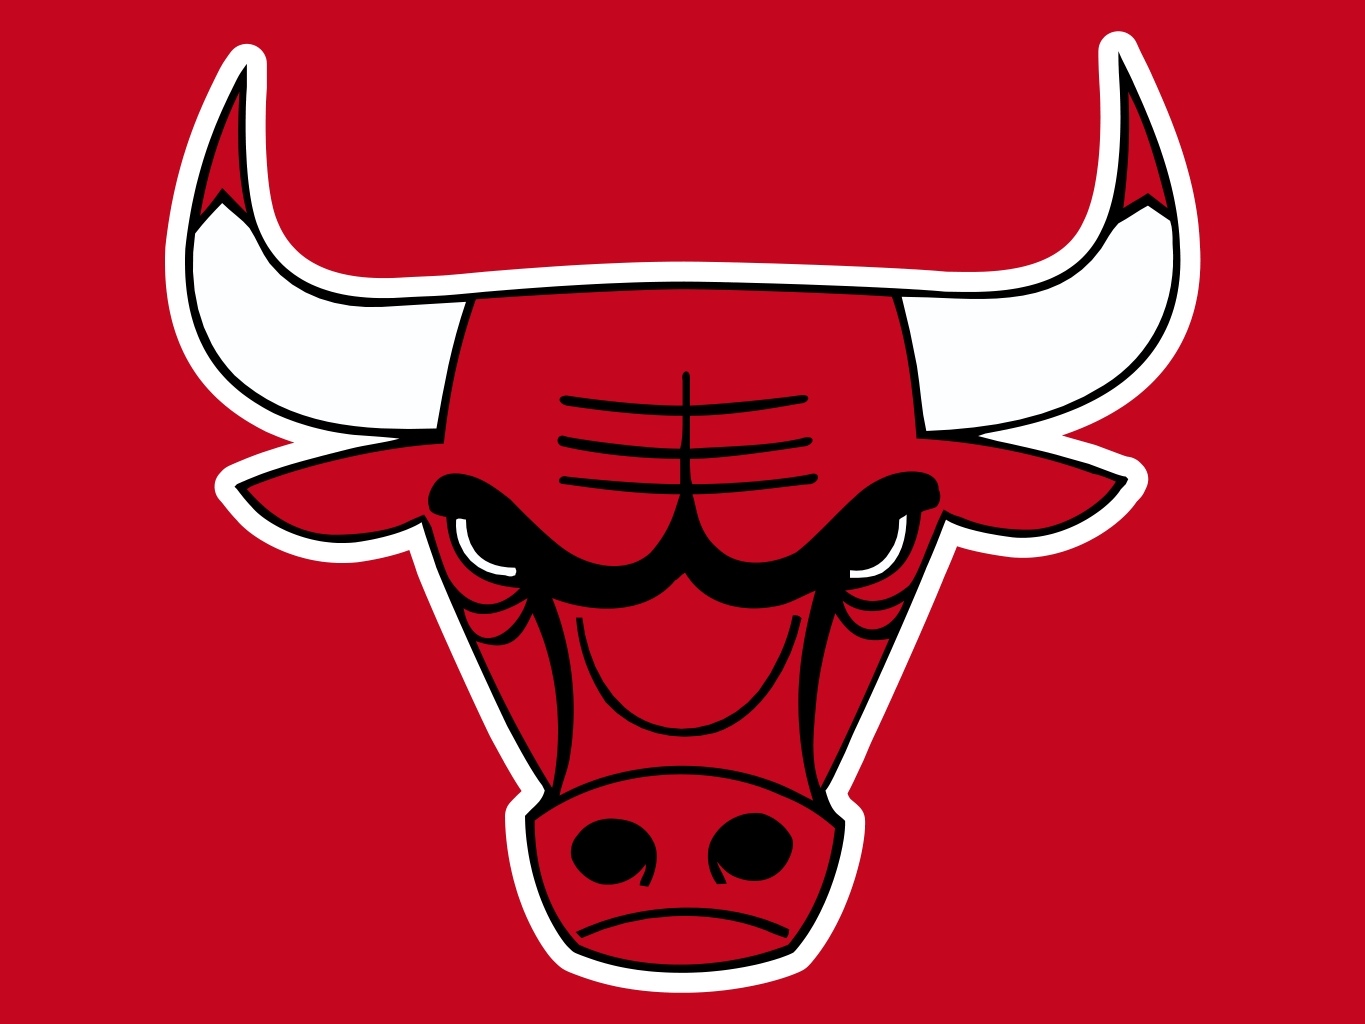 Chicago Bulls, Pro Sports Teams Wiki